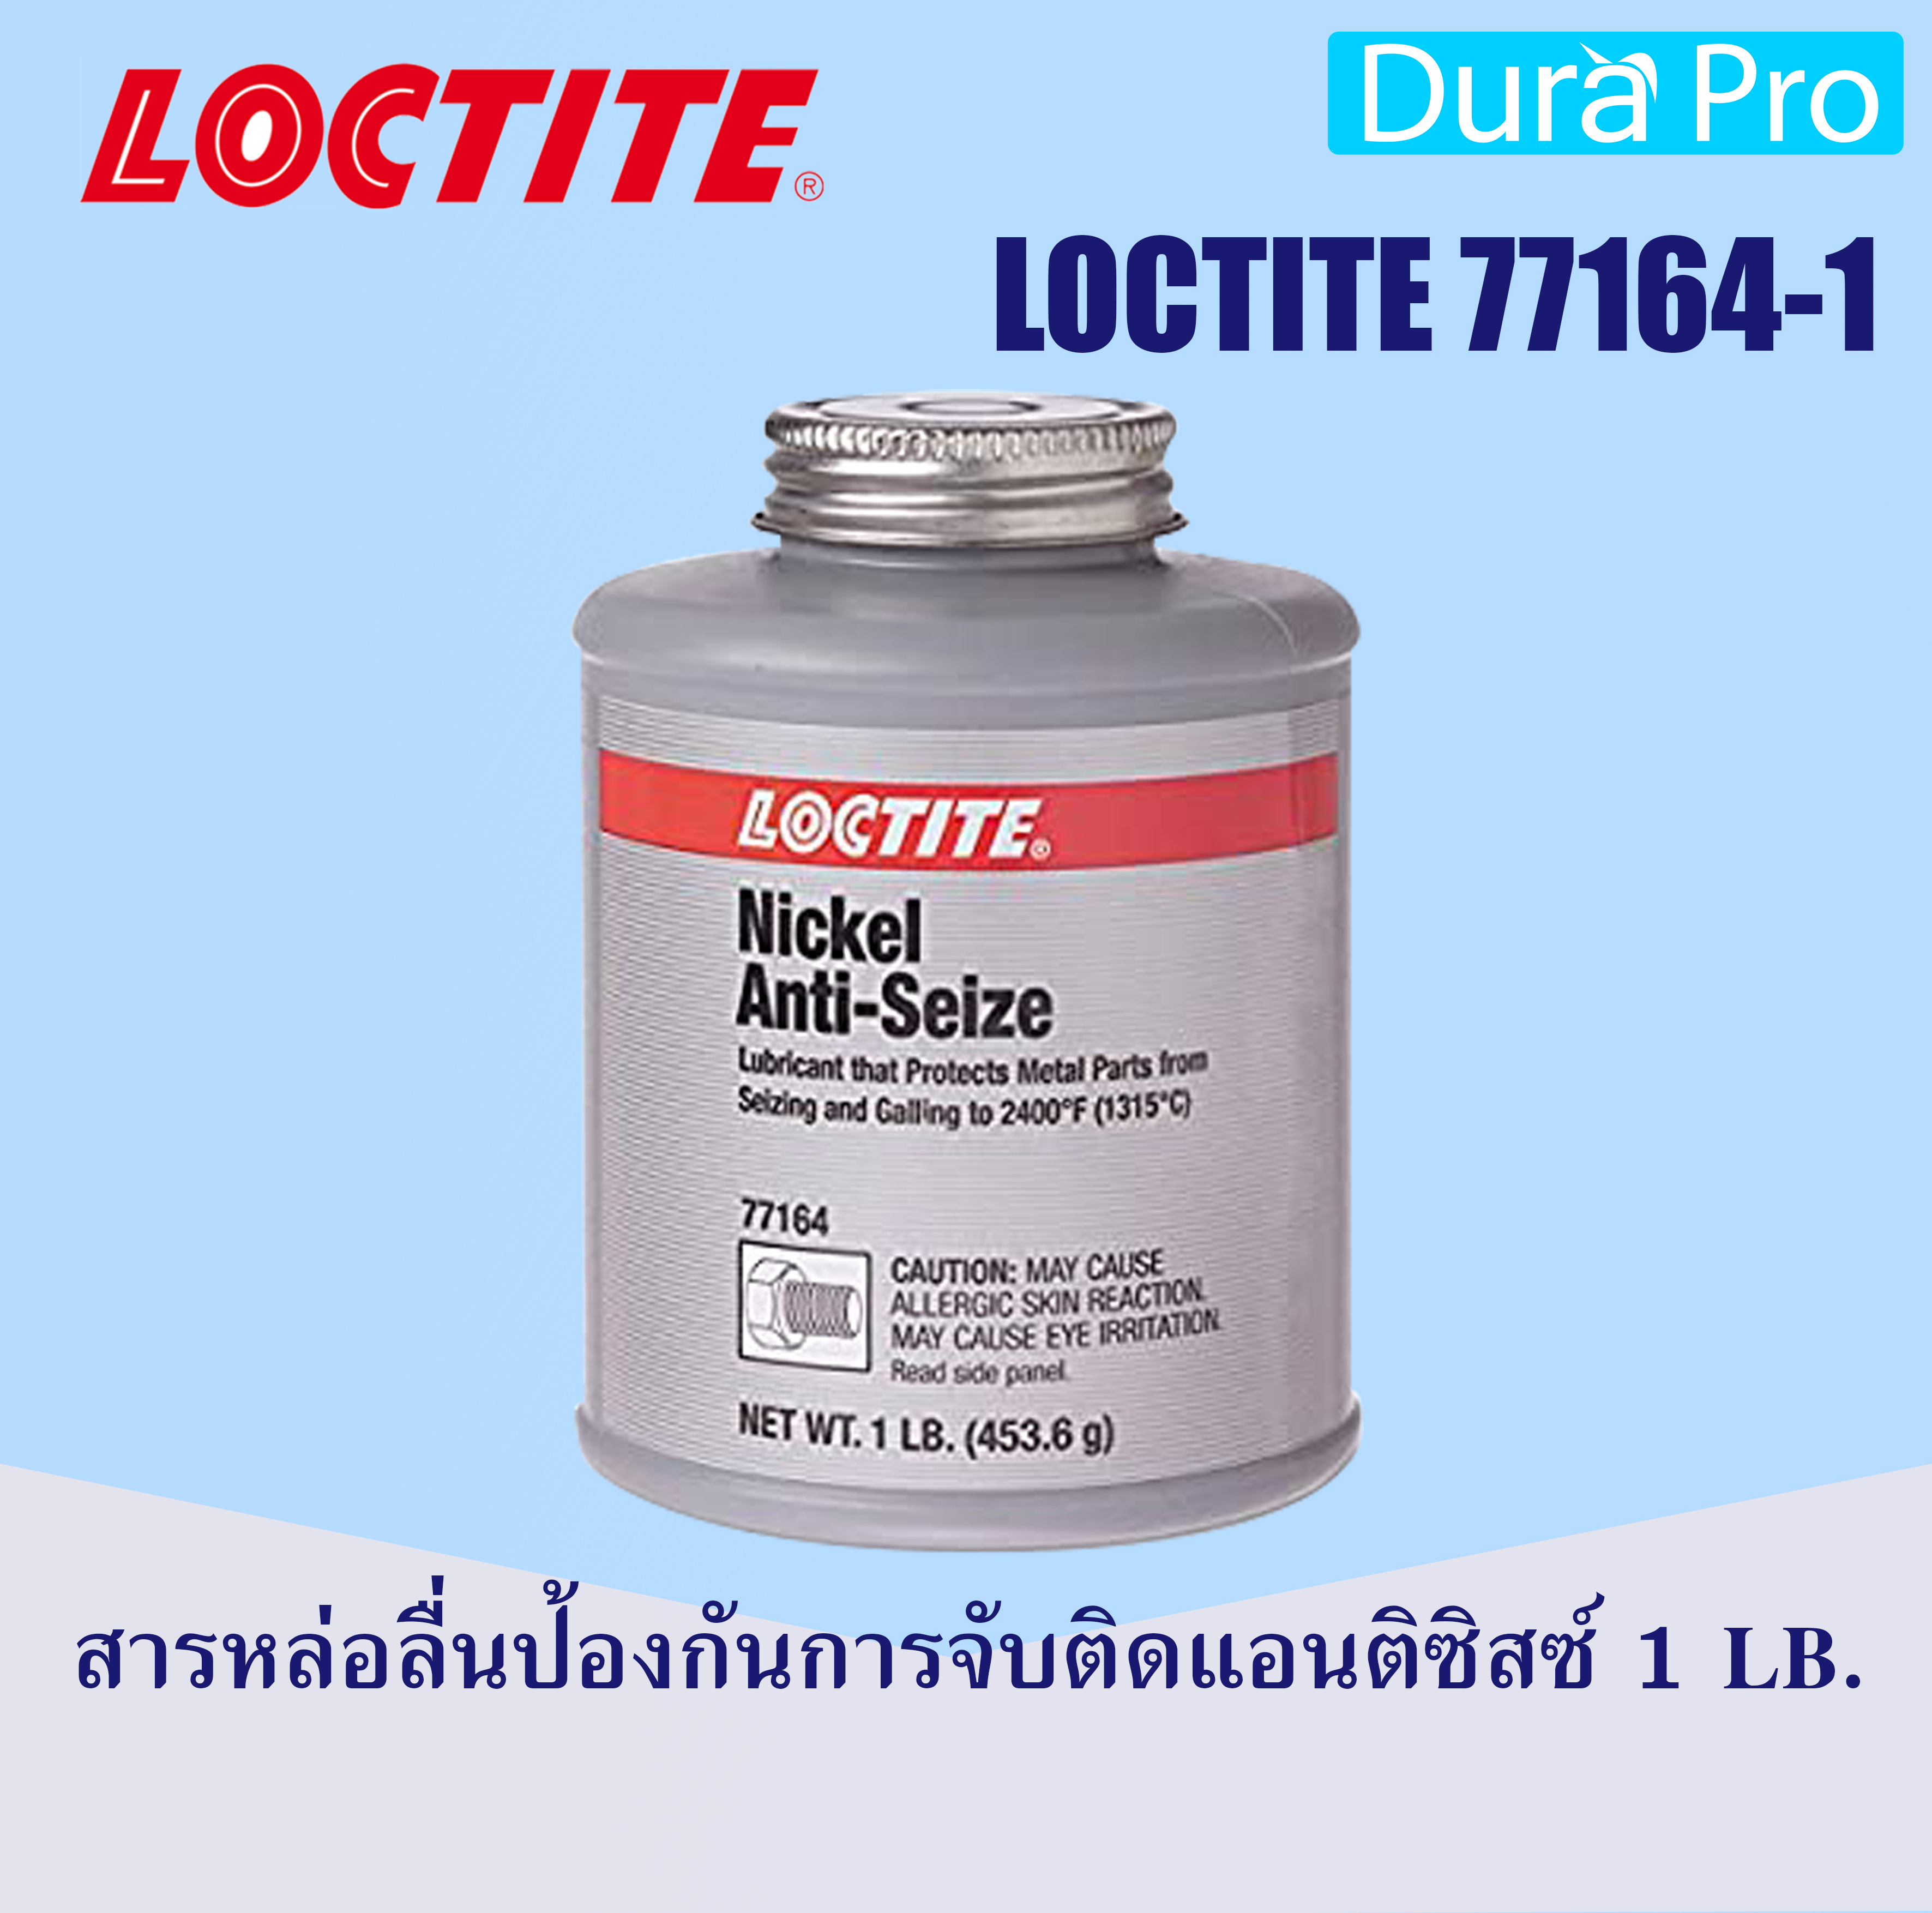 LOCTITE 77164-1 NICKEL ANTI ( ล็อคไทท์ ) สารหล่อลื่นป้องกันการจับติดแอนติซิสซ์1 LB. จัดจำหน่ายโดย Dura Pro